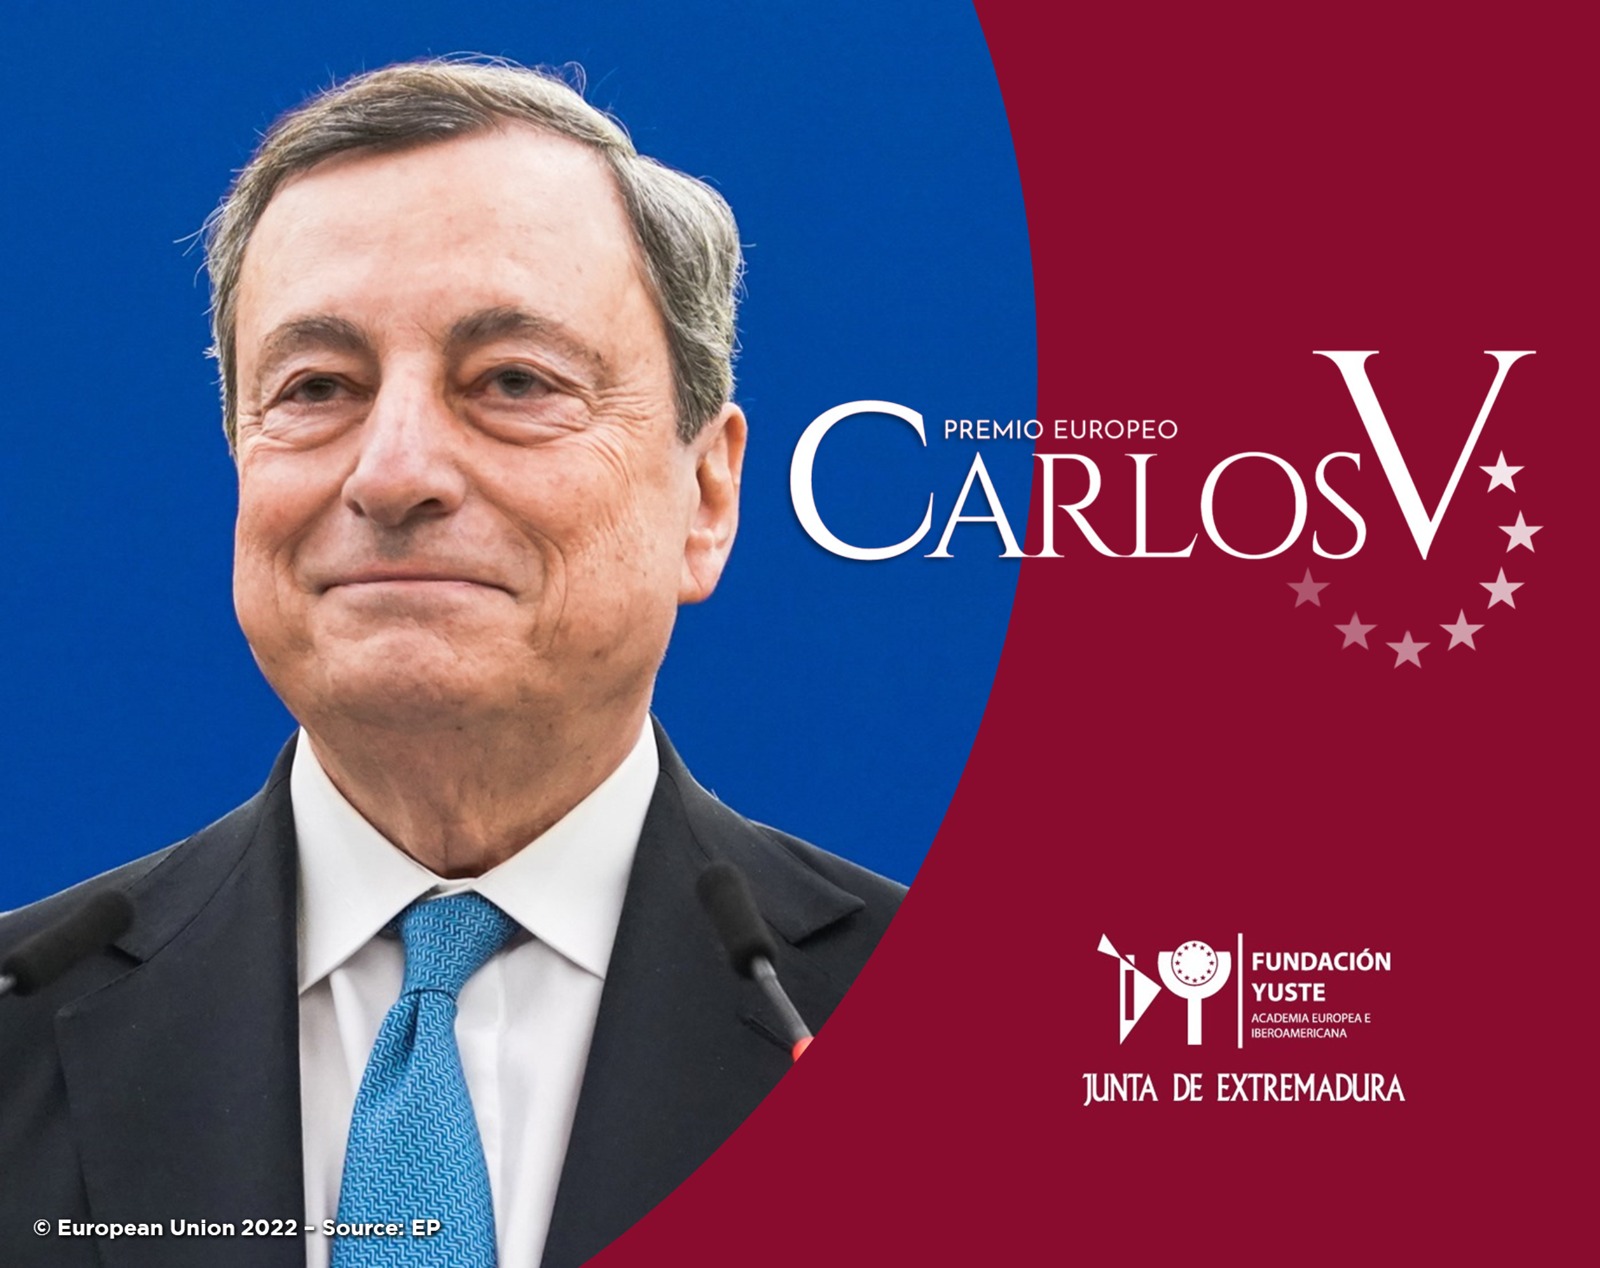 Image 6 of article Mario Draghi, XVII Premio Europeo Carlos V